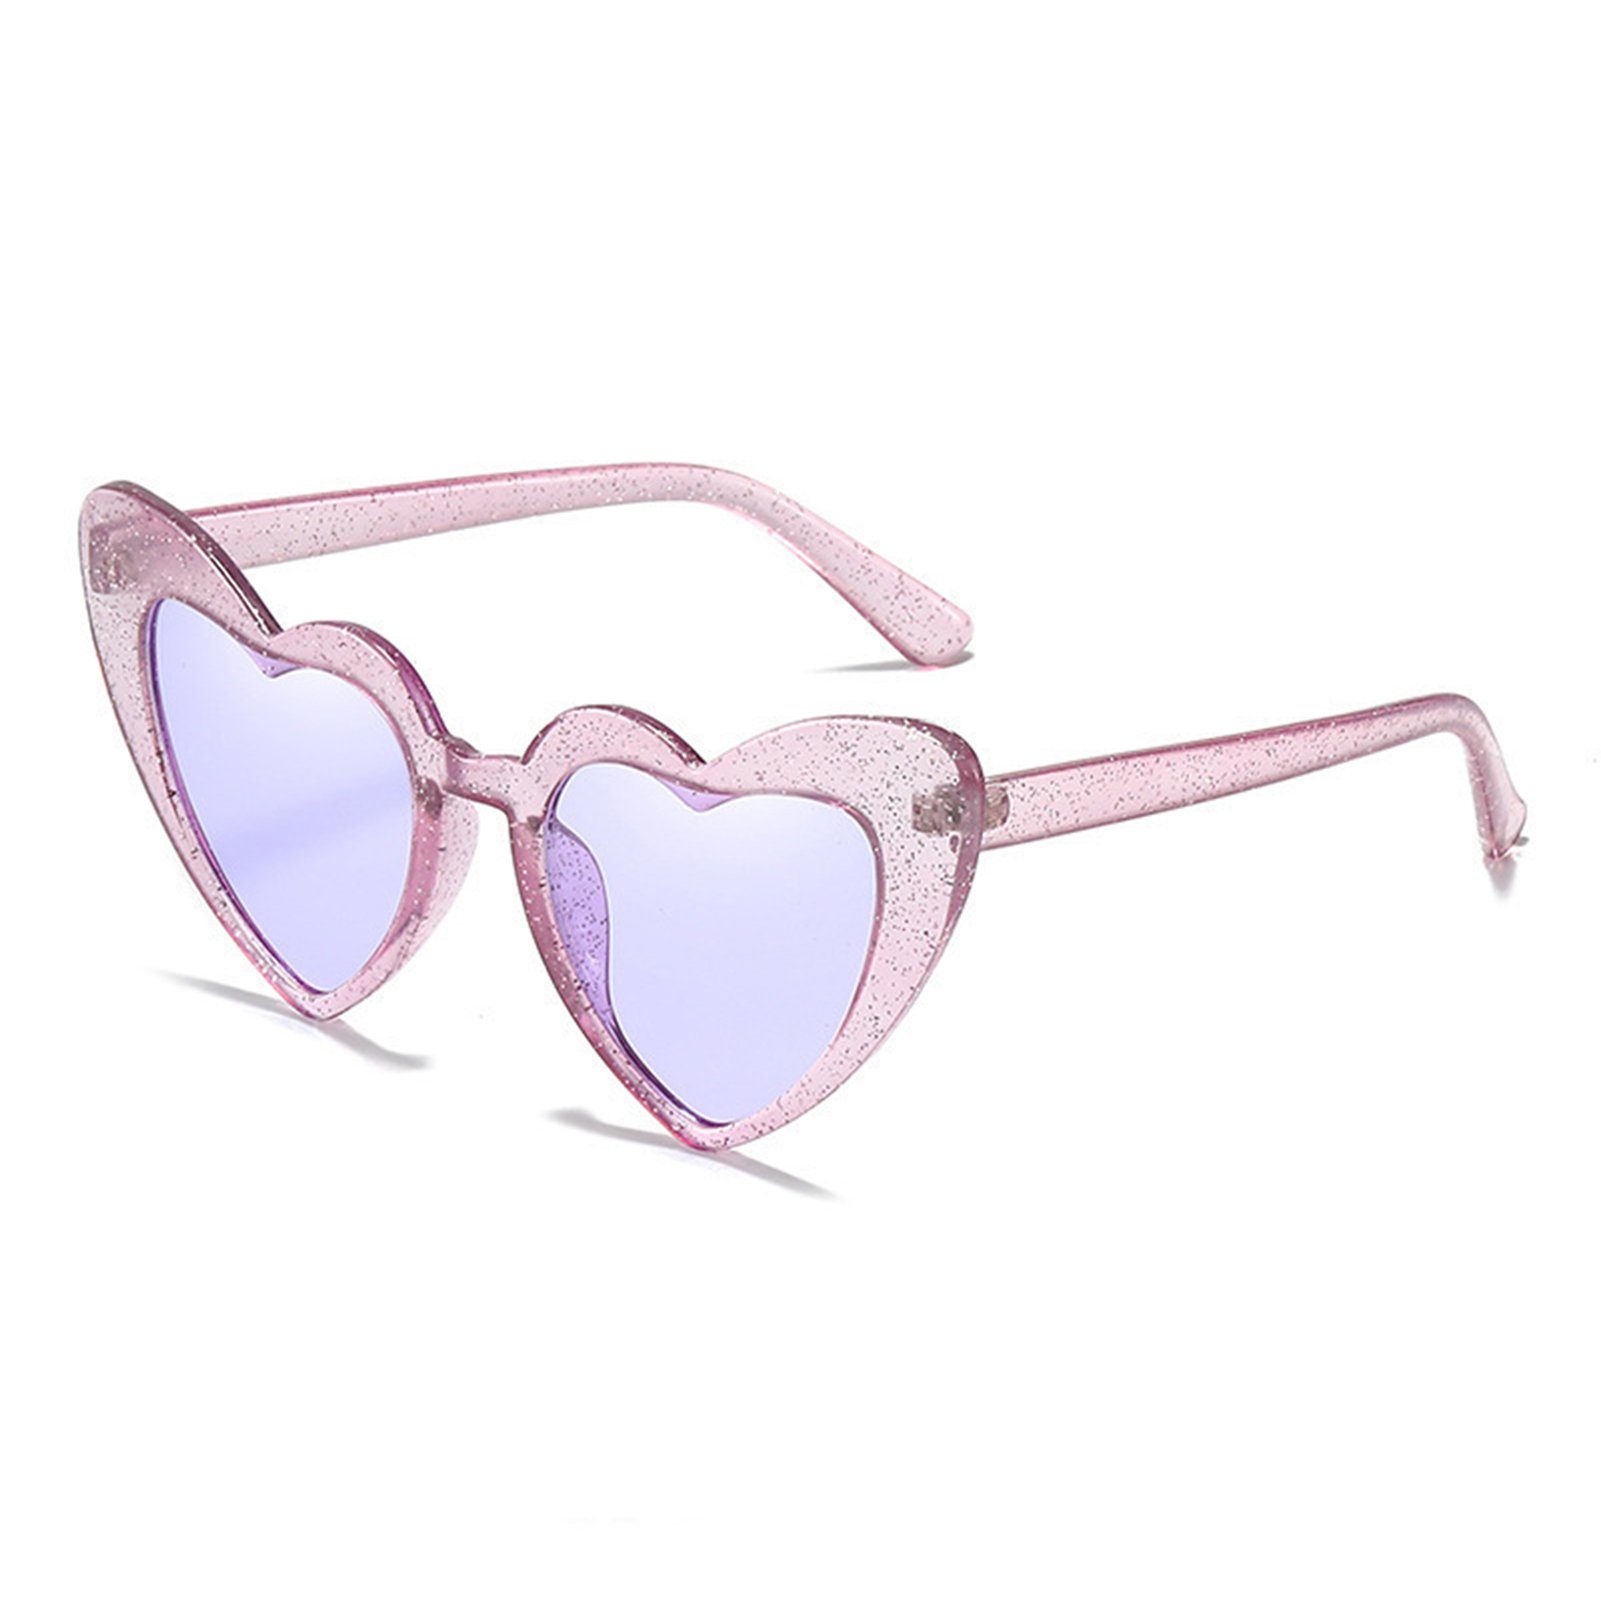 Blusmart Retrosonnenbrille Damen-Sonnenbrille Vintage-Stil, Blendfrei In purple Herzform, flash